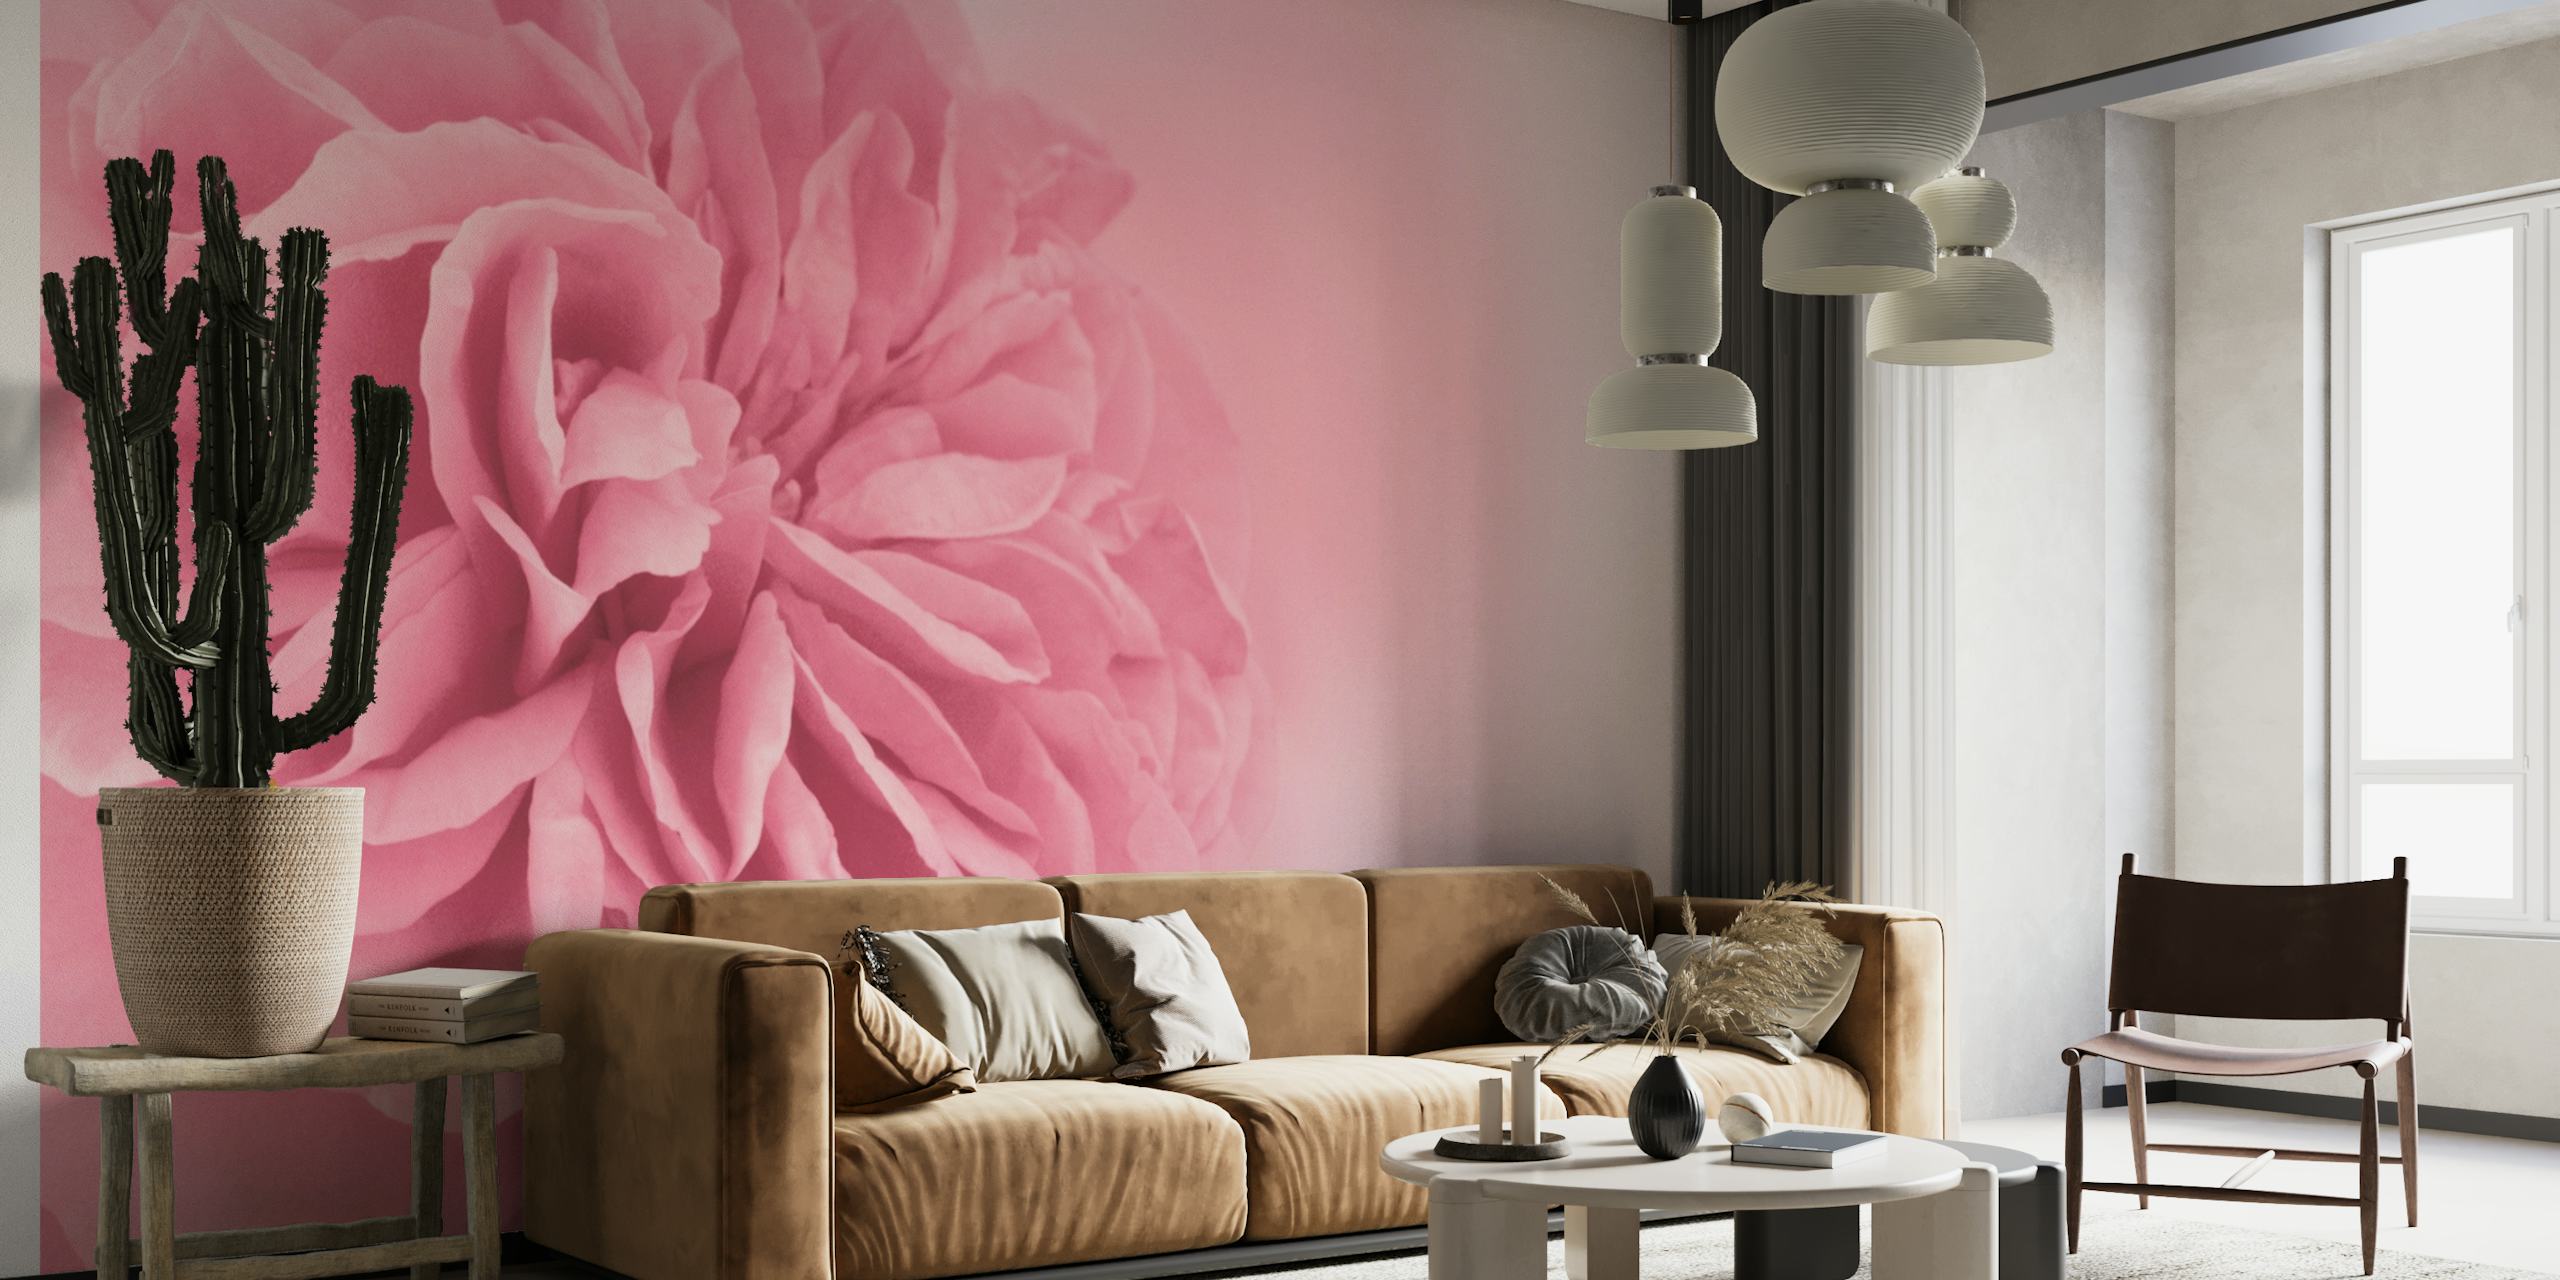 Light Pink Rose 1 wallpaper